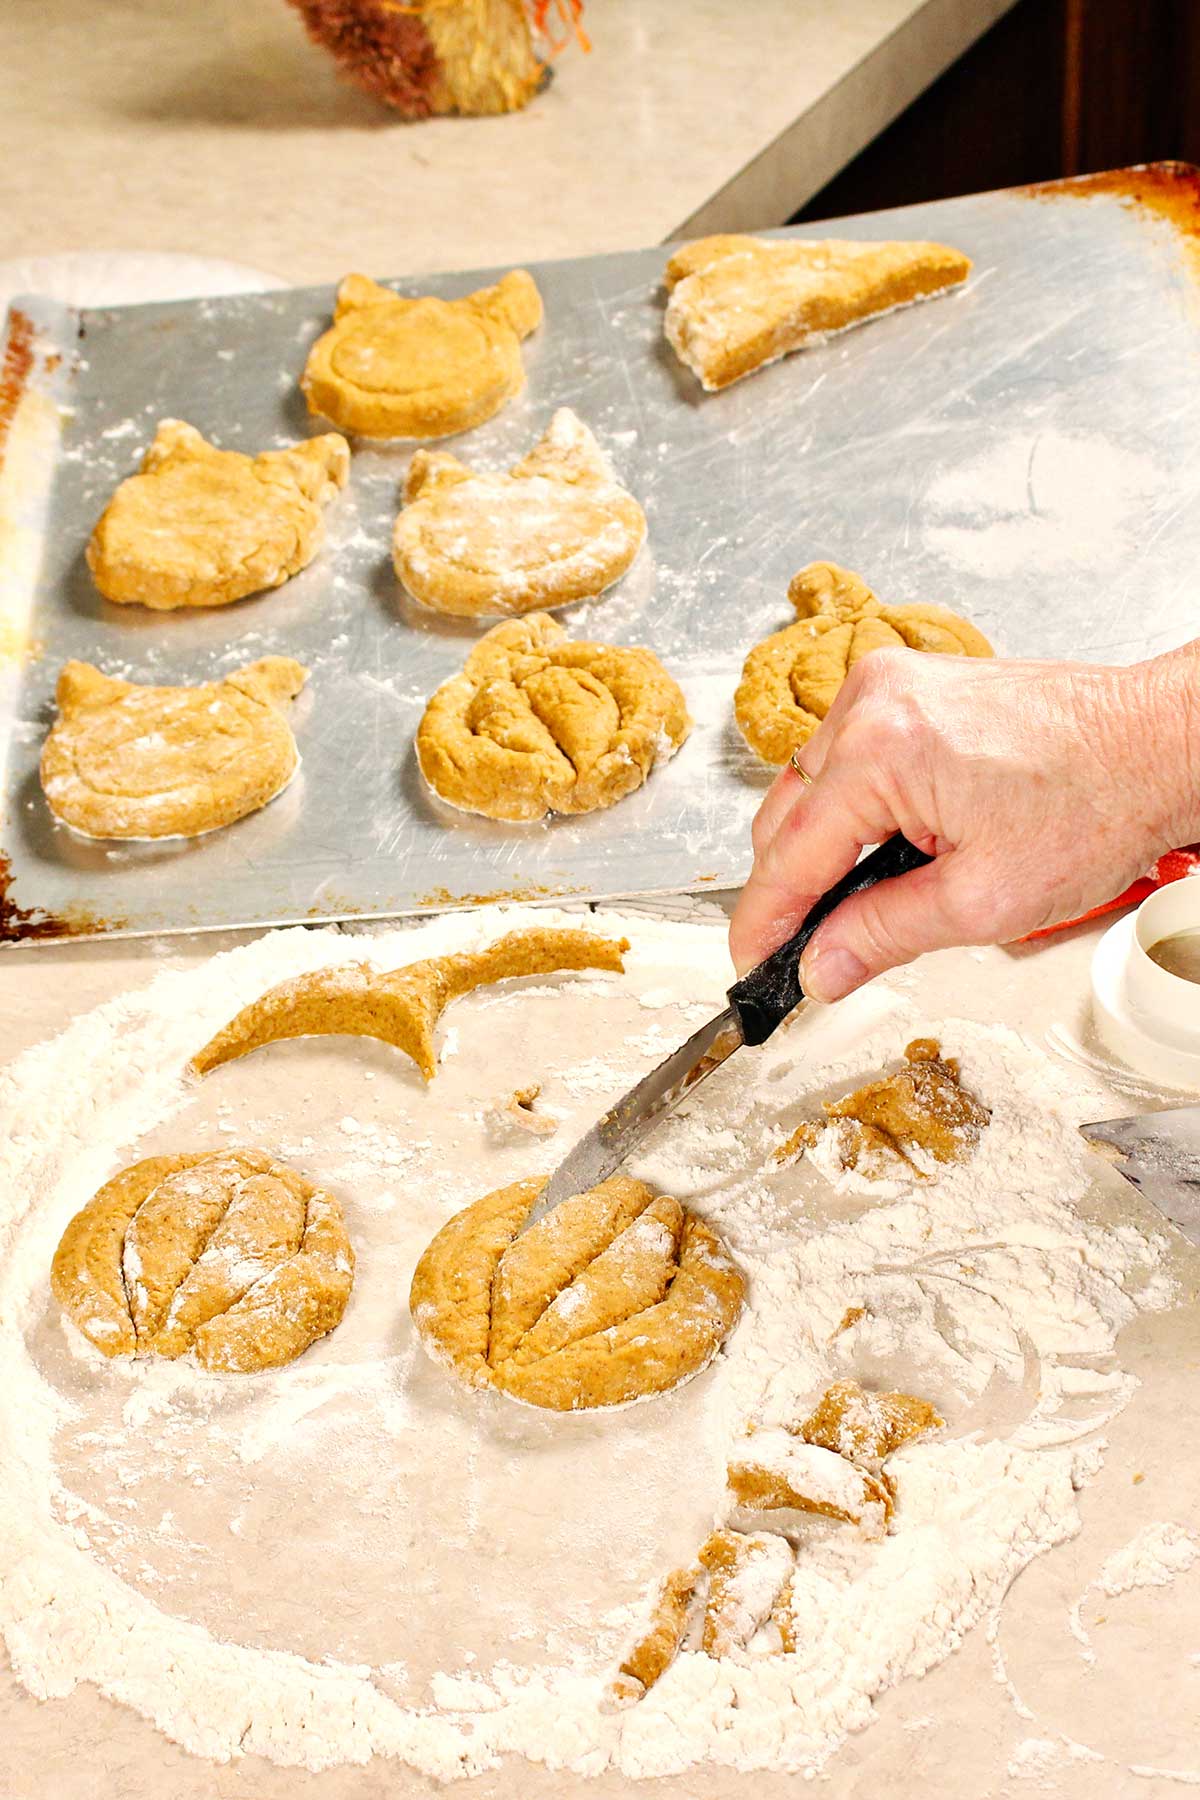 Hand cutting designs in scone dough to resemble a pumpkin before baking.